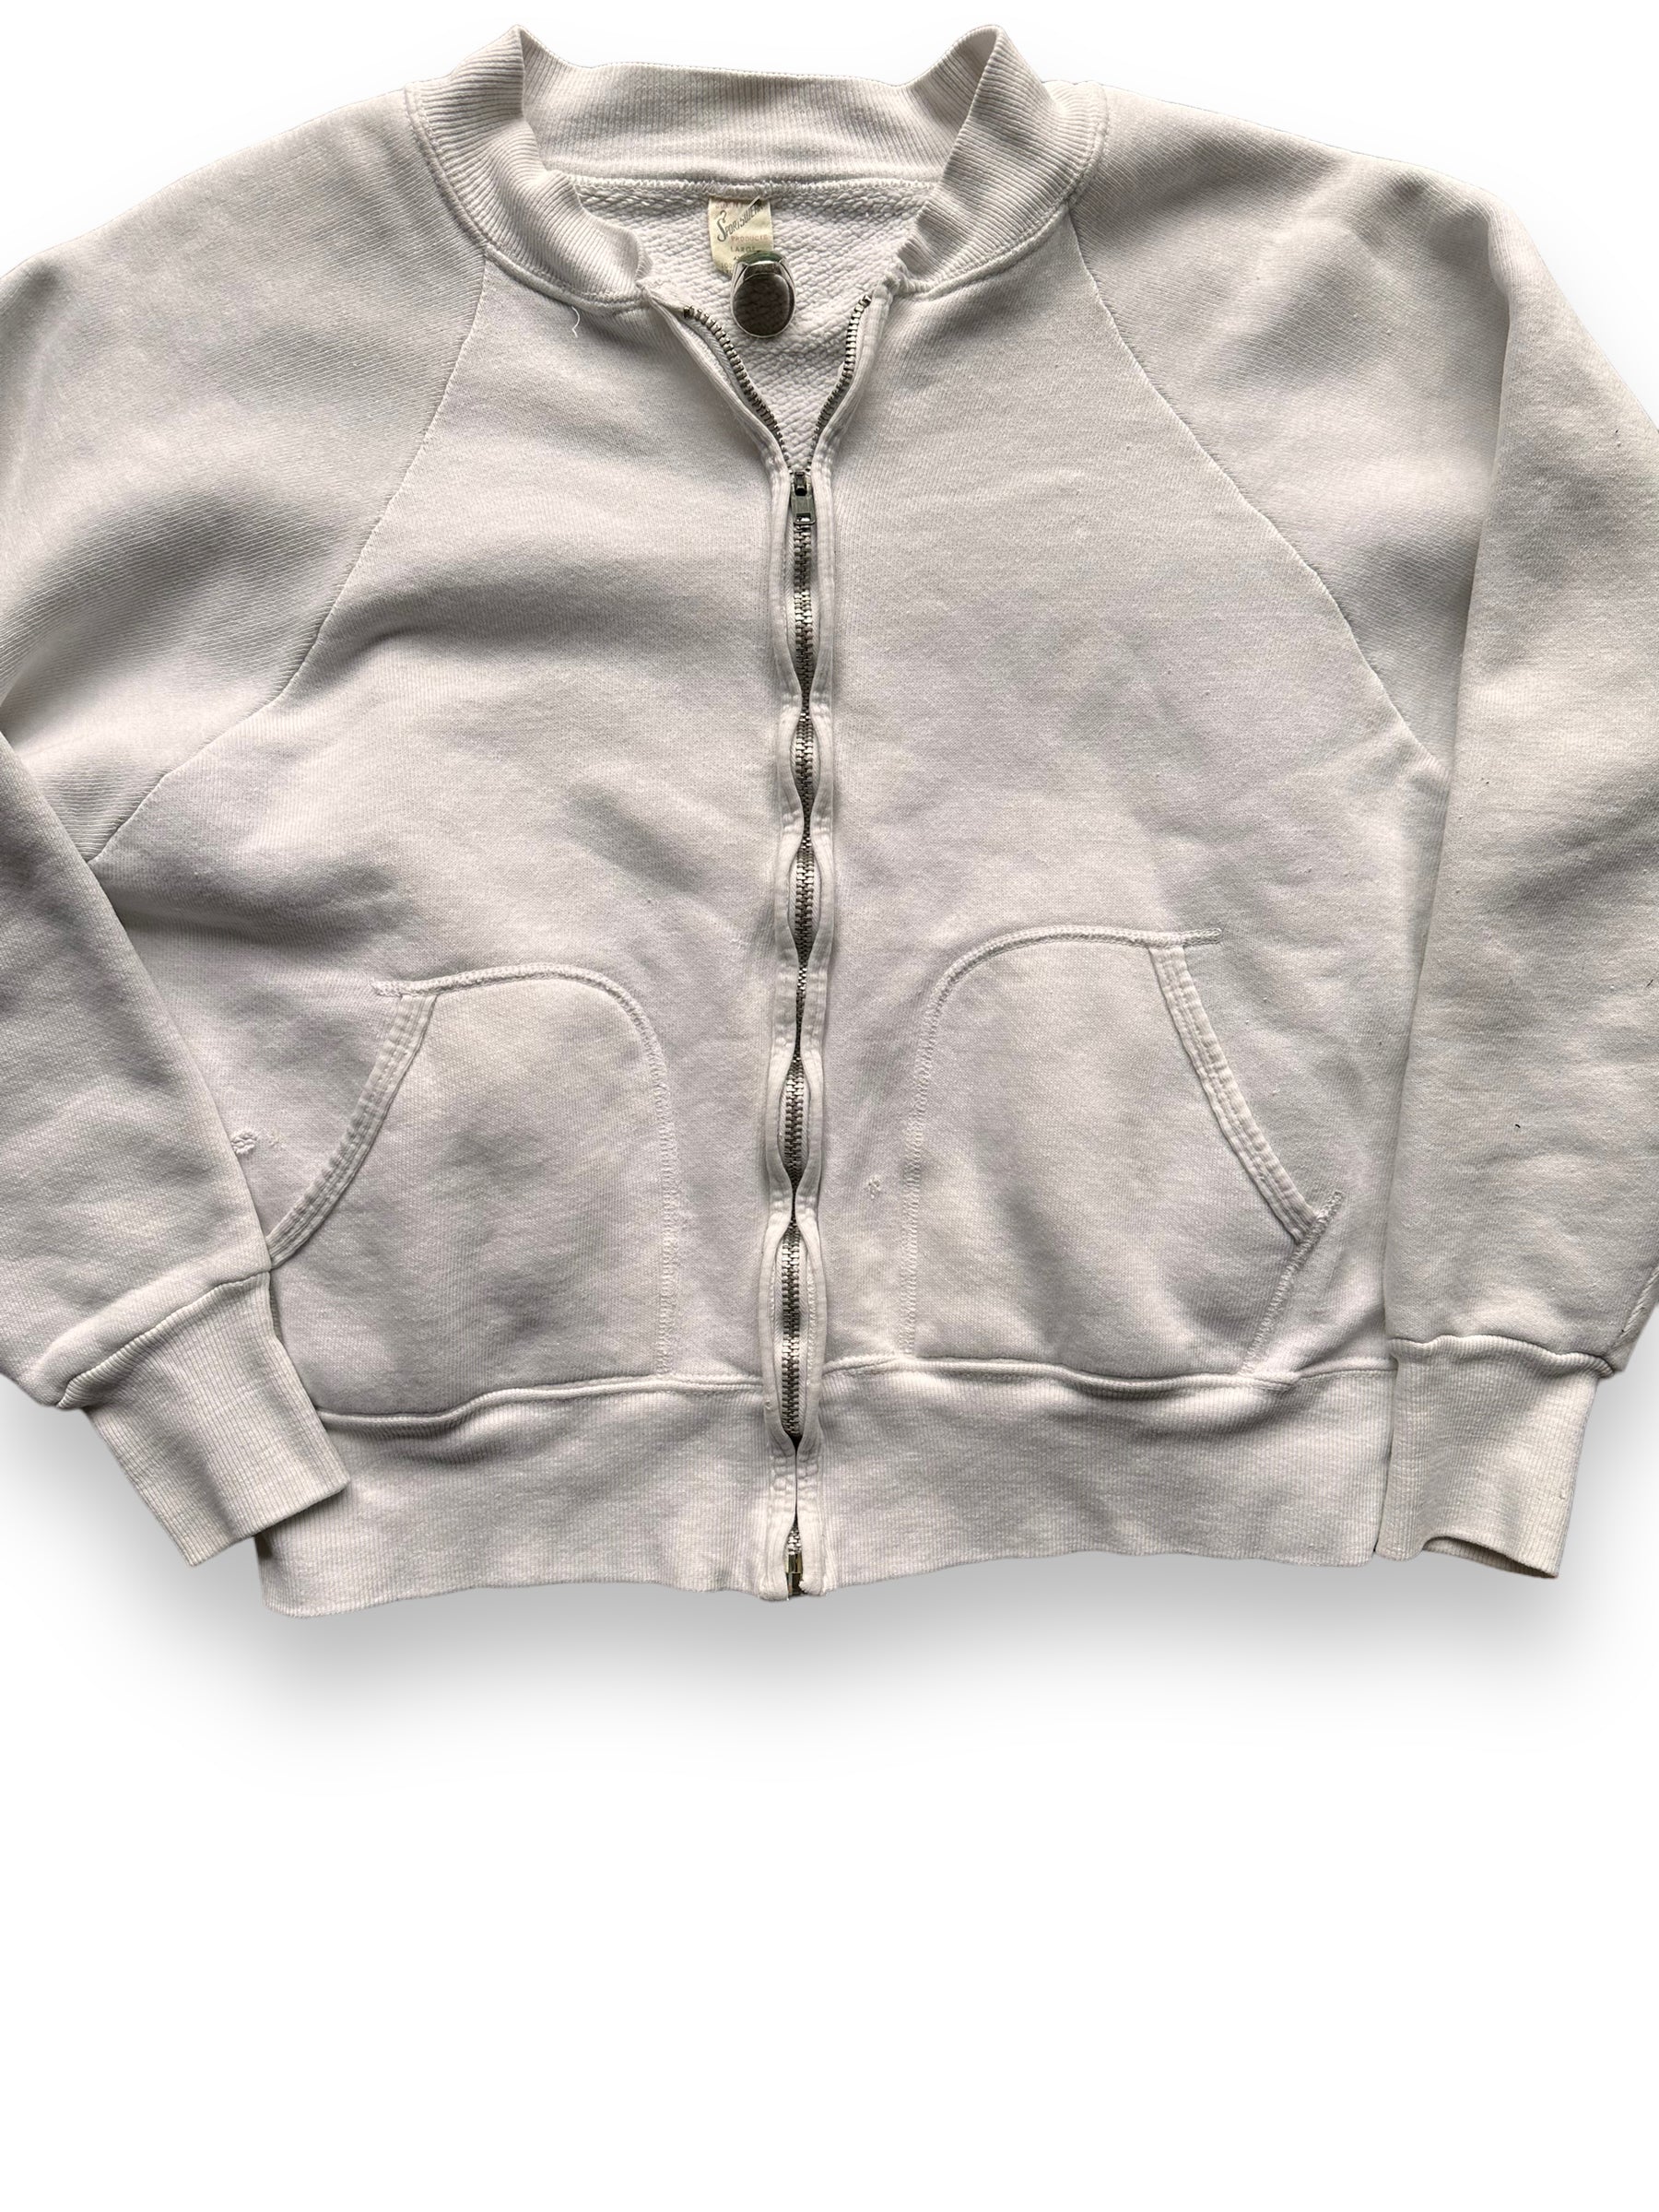 Front Detail on Vintage Russell Quality Sportswear Zip Up Sweatshirt SZ XL | Vintage Sweatshirt Seattle | Barn Owl Vintage Seattle